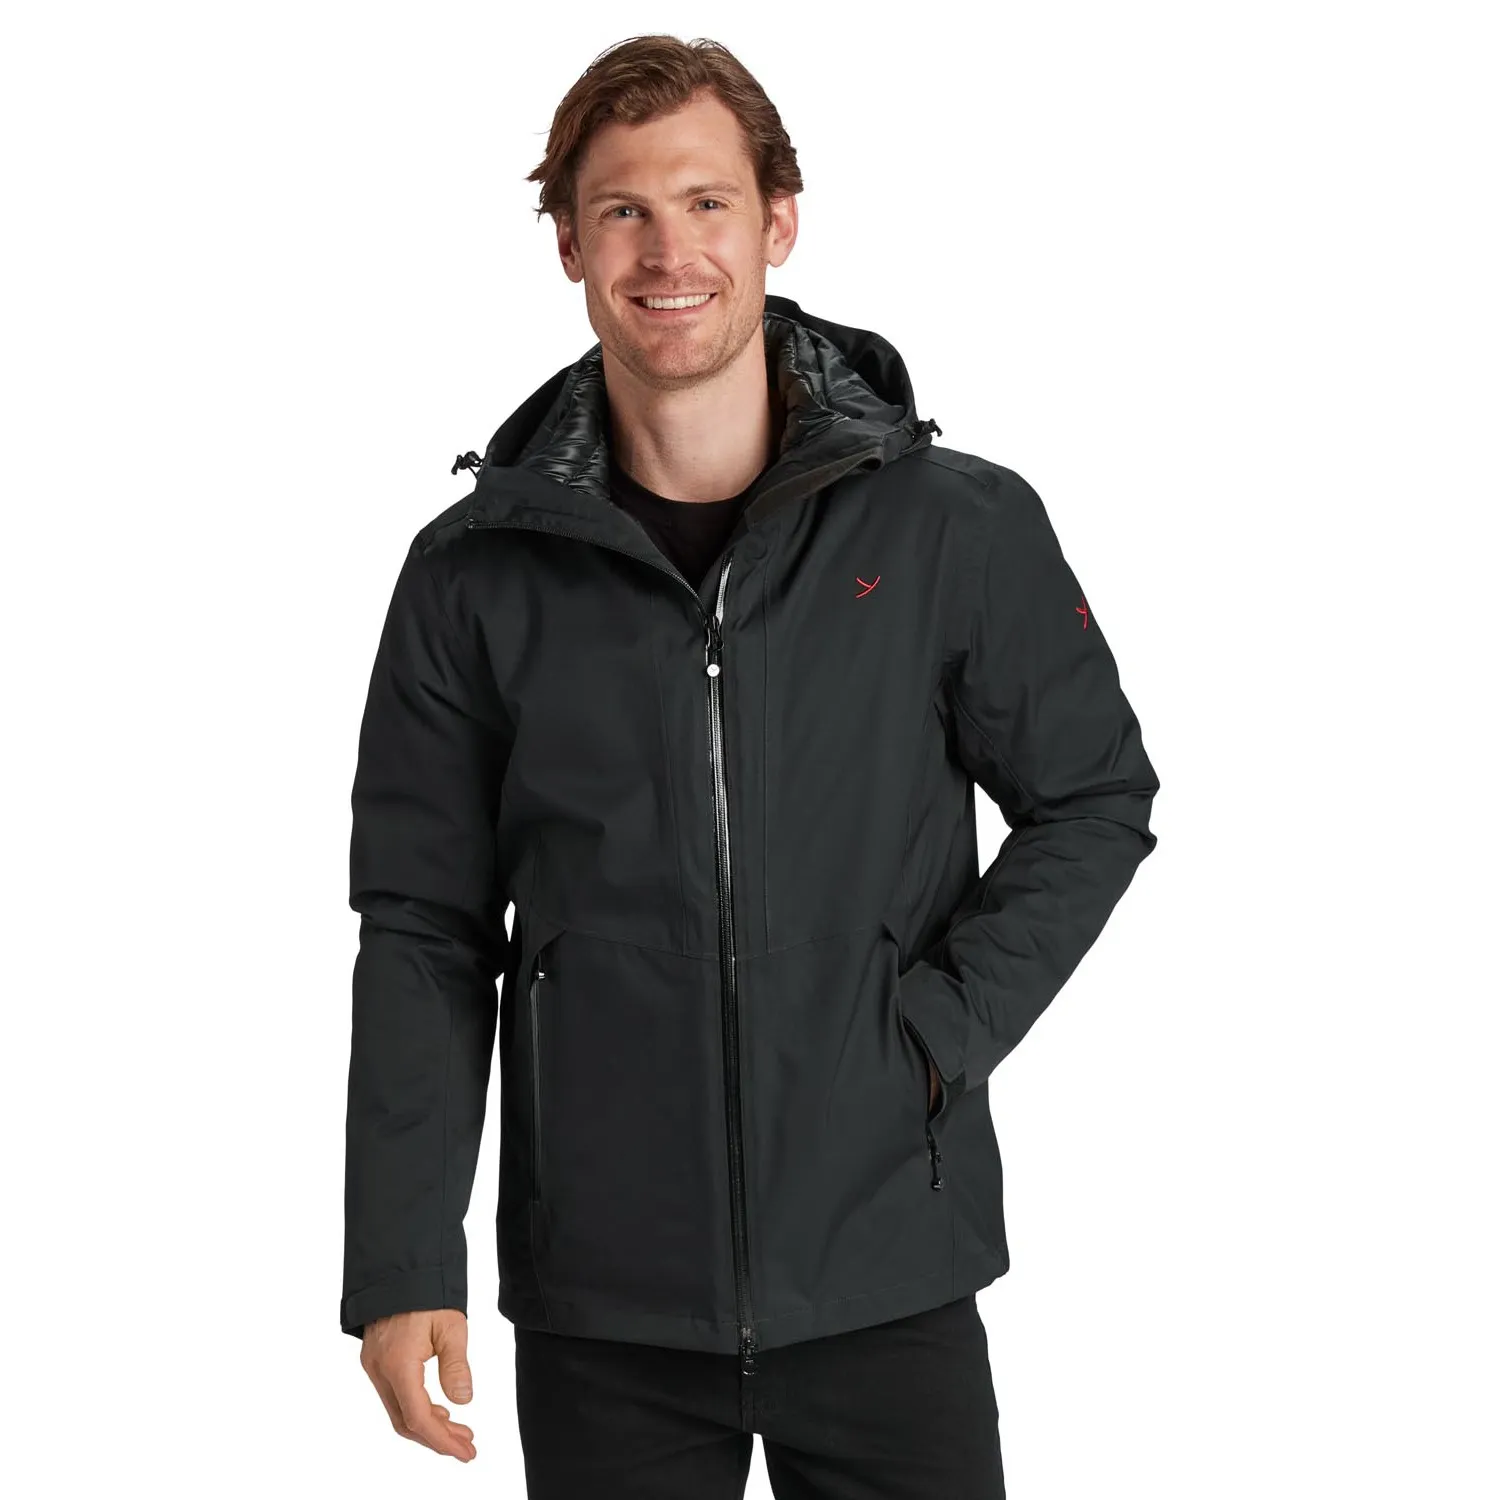 59_Nao-1059-3-in-1-jacket-for-men-Y-by-Nordisk-black-model-01.jpg